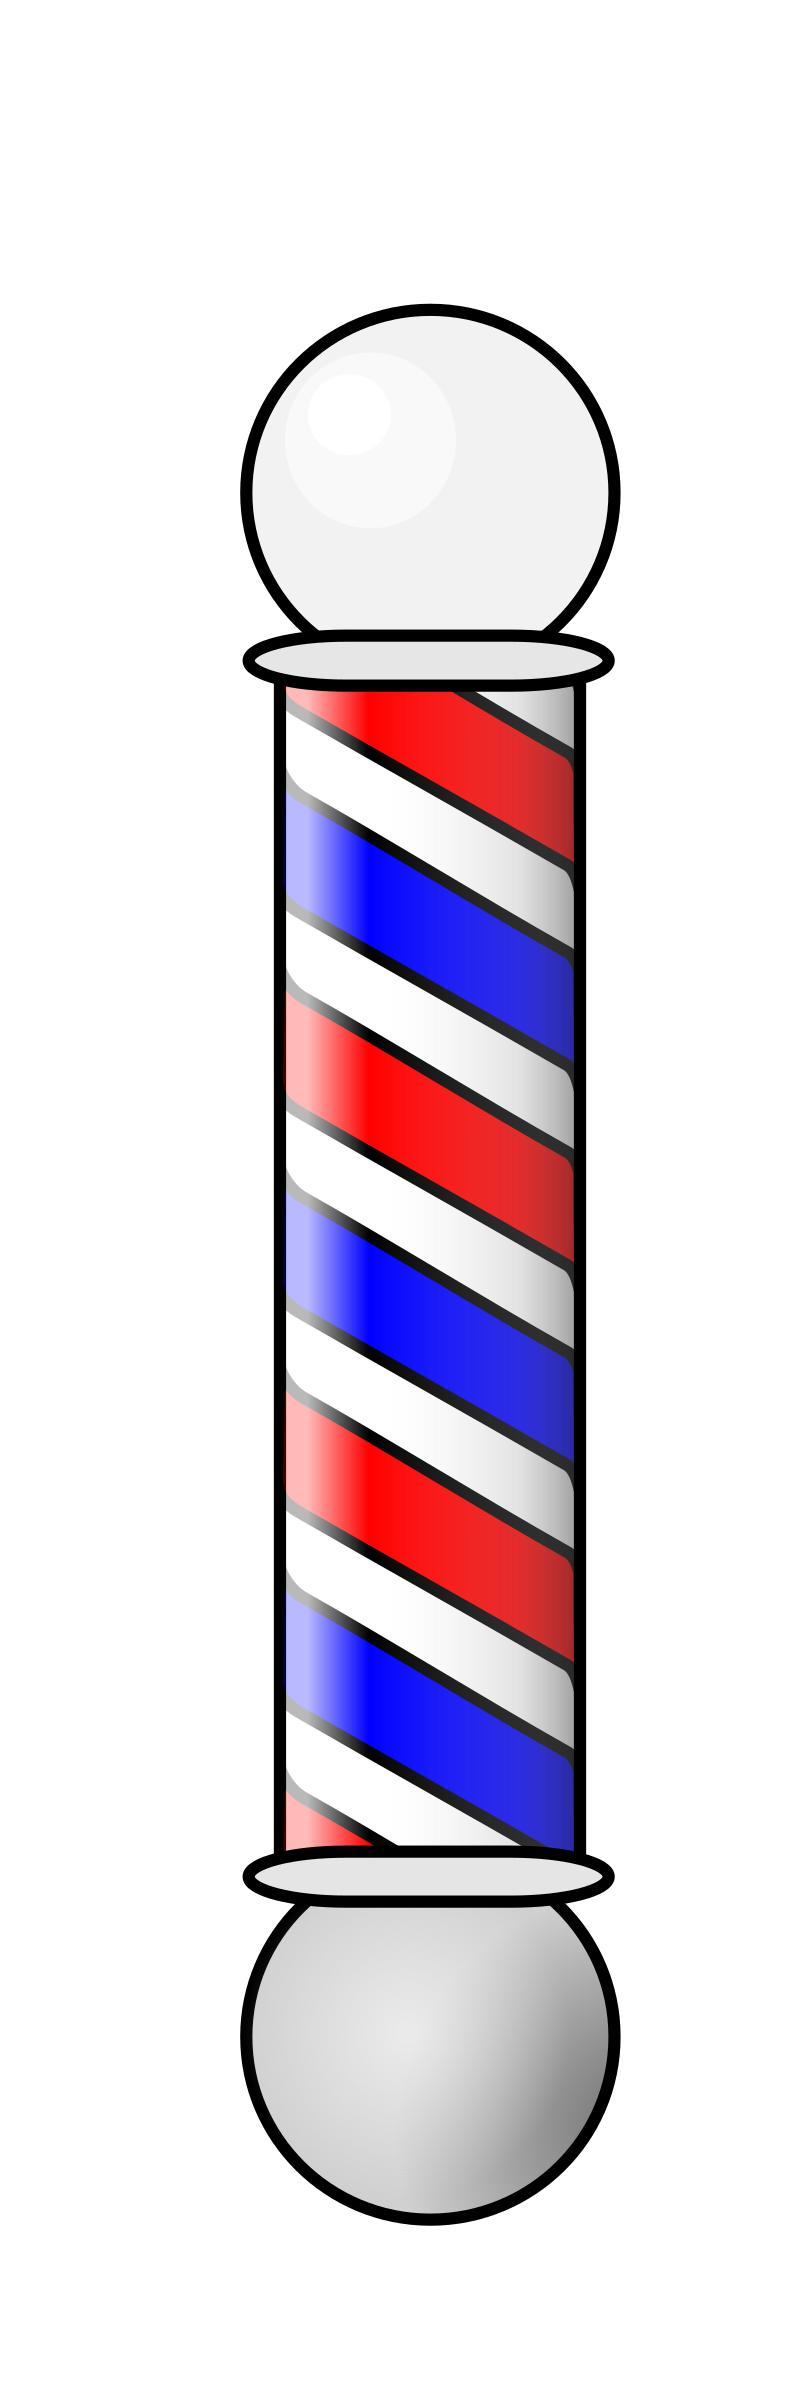 BarberShop Pole 2 Animation png transparent